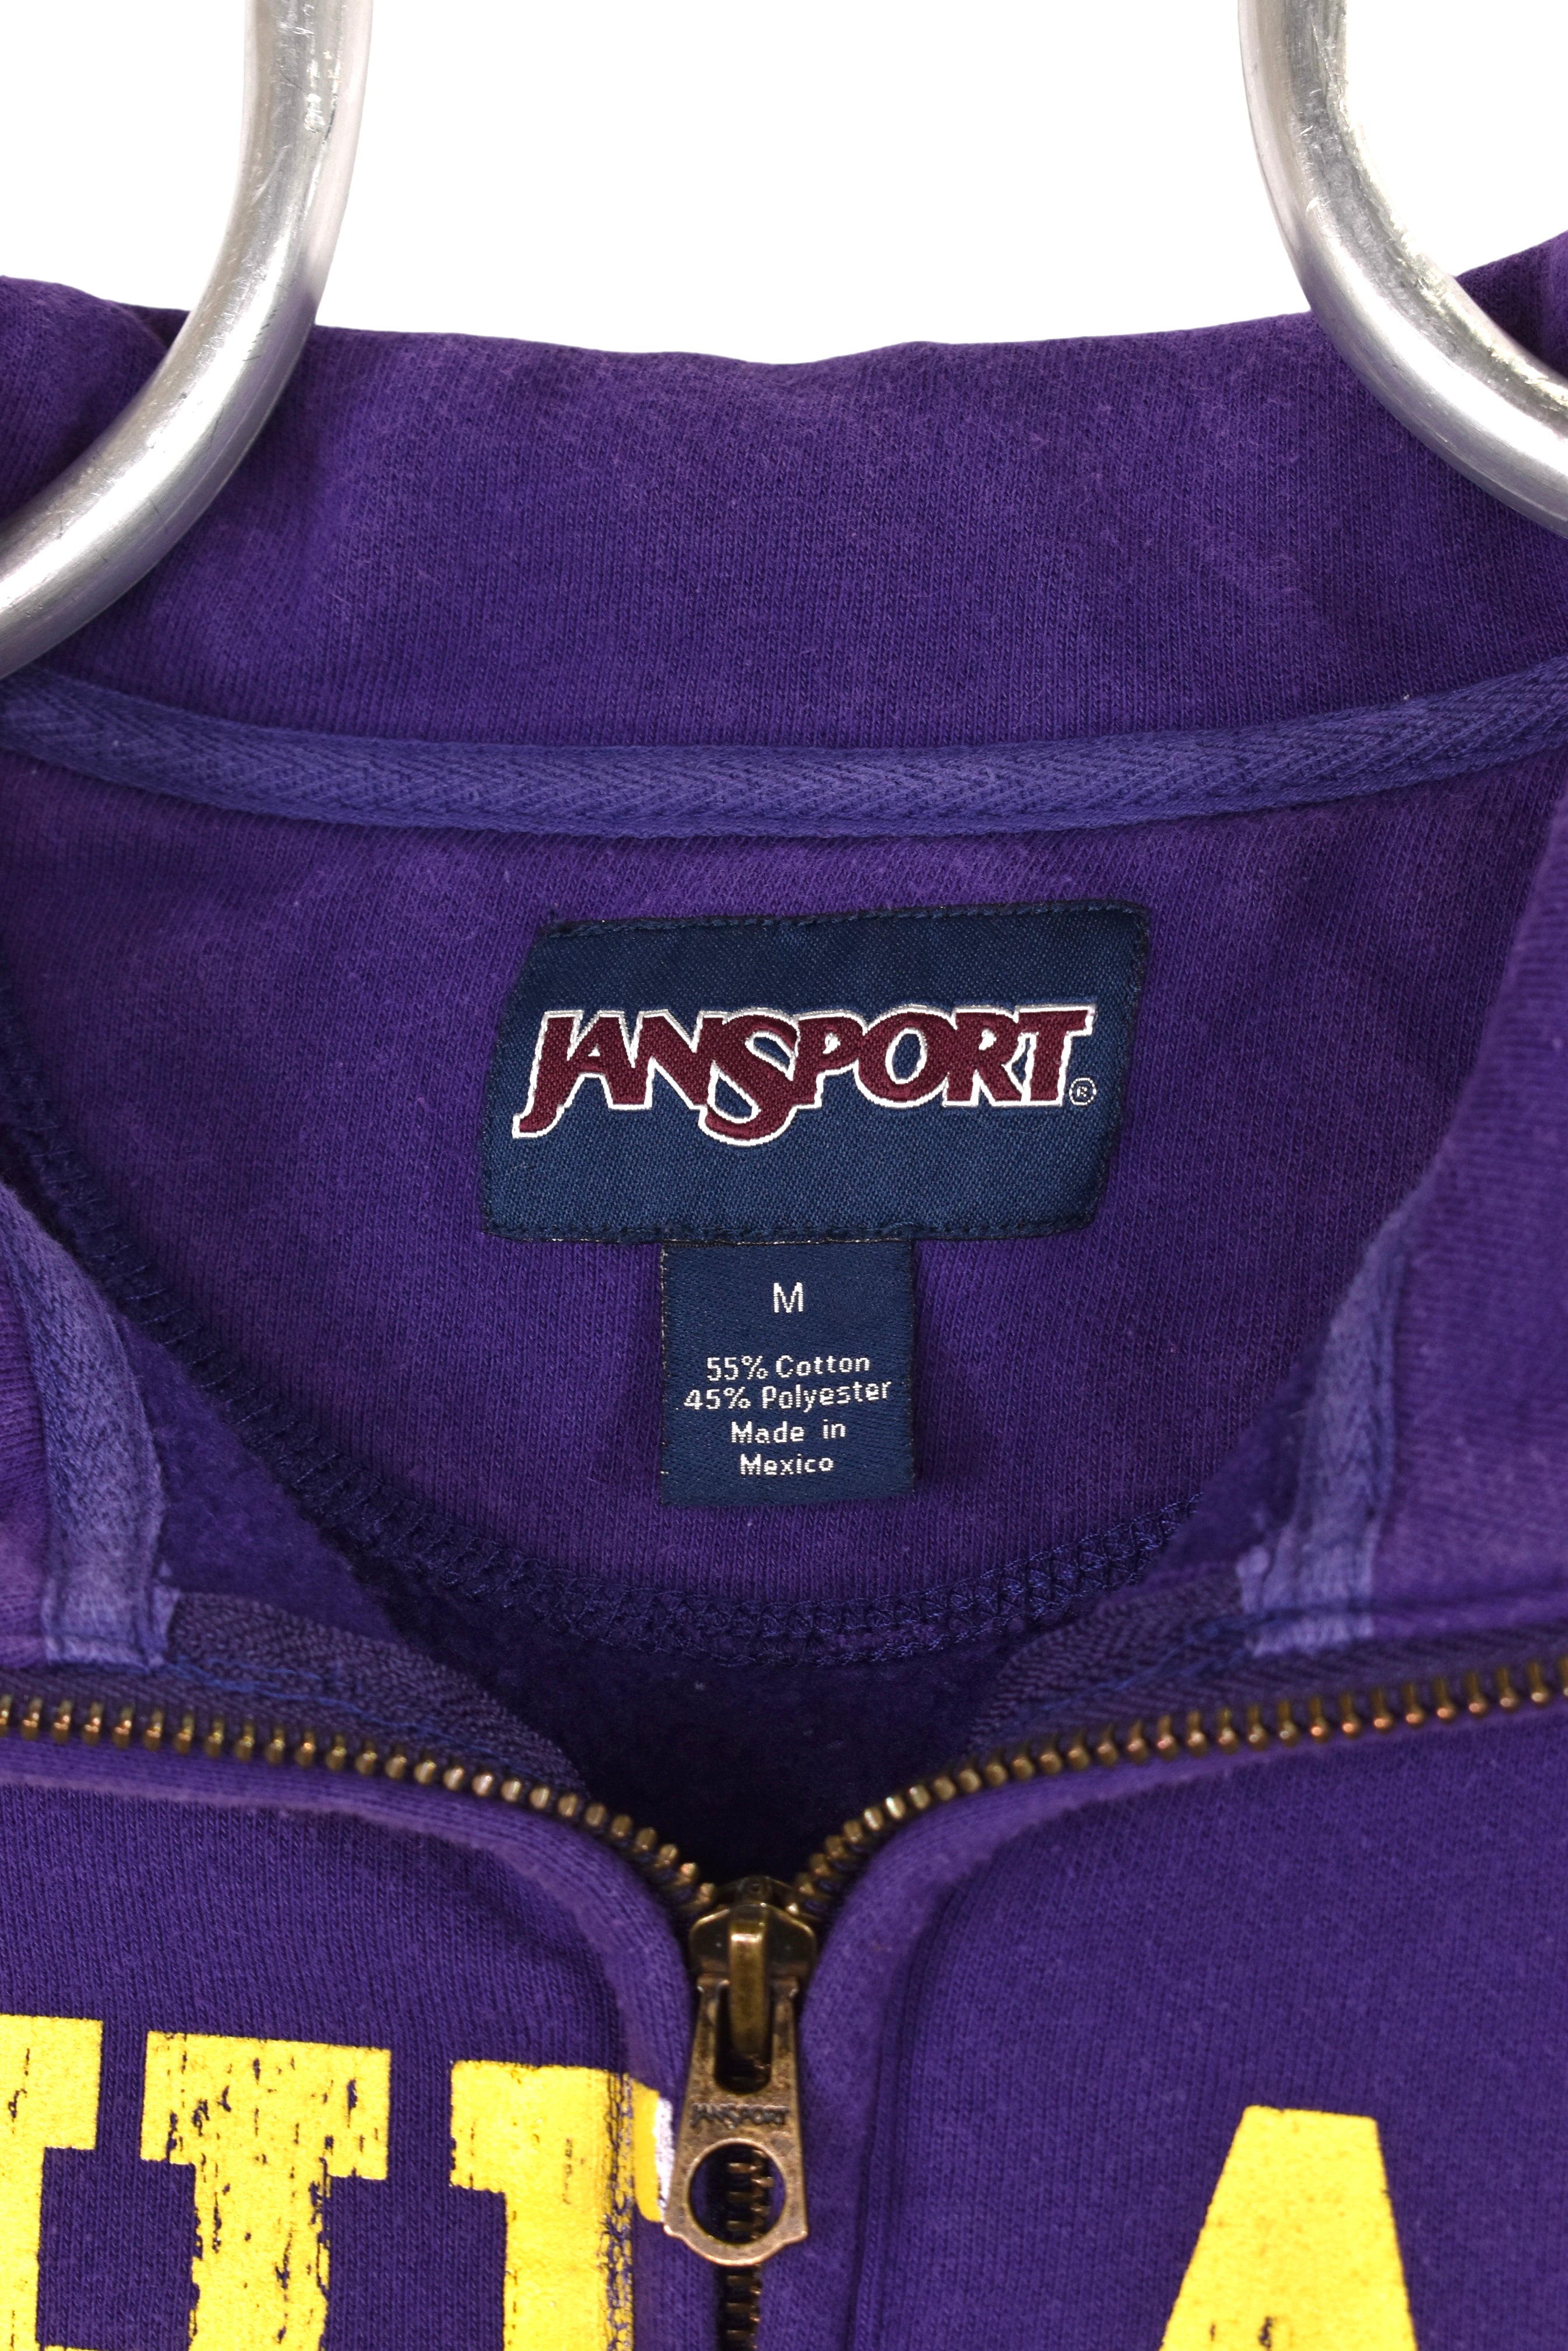 Vintage Ashland Eagles sweatshirt, purple graphic 1/4 zip jumper - Medium